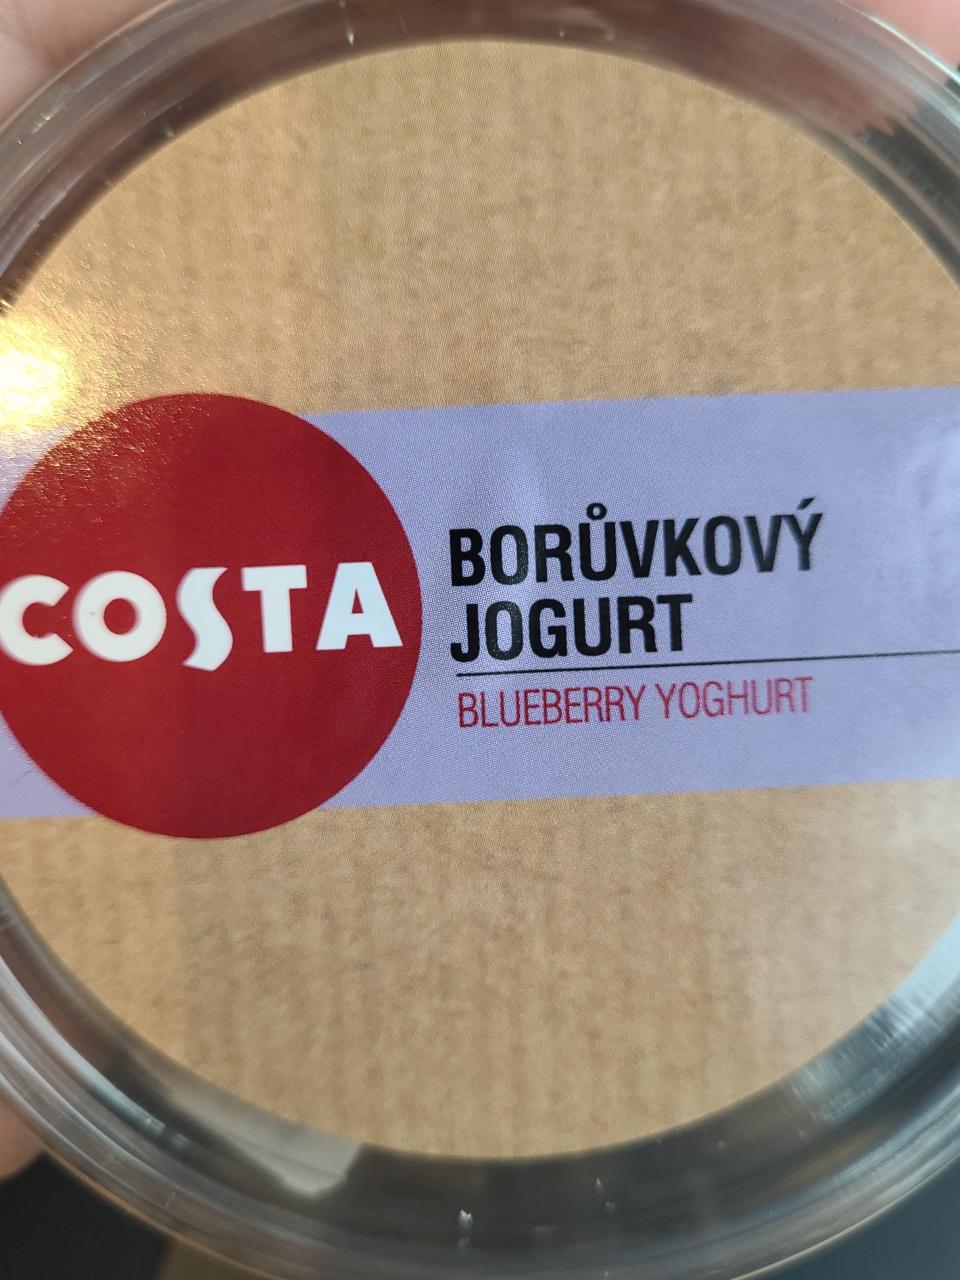 Fotografie - Borůvkový jogurt Costa